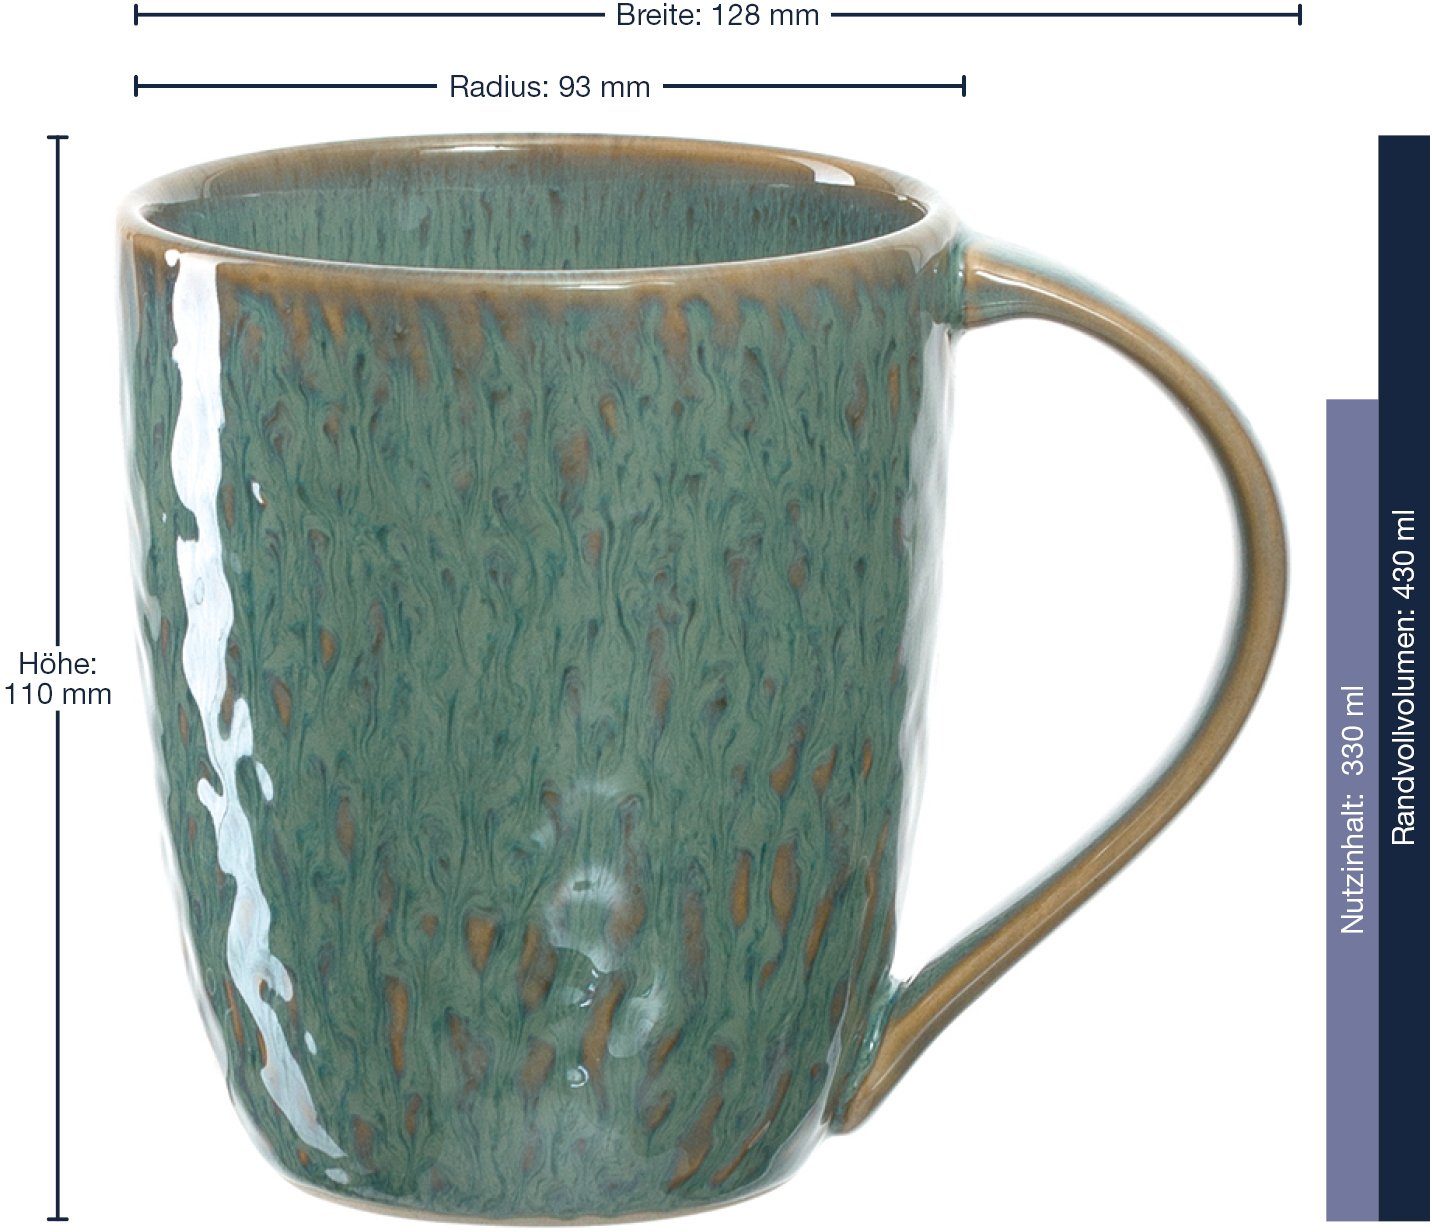 430 LEONARDO ml, Keramik, 6-teilig Matera, Becher grün